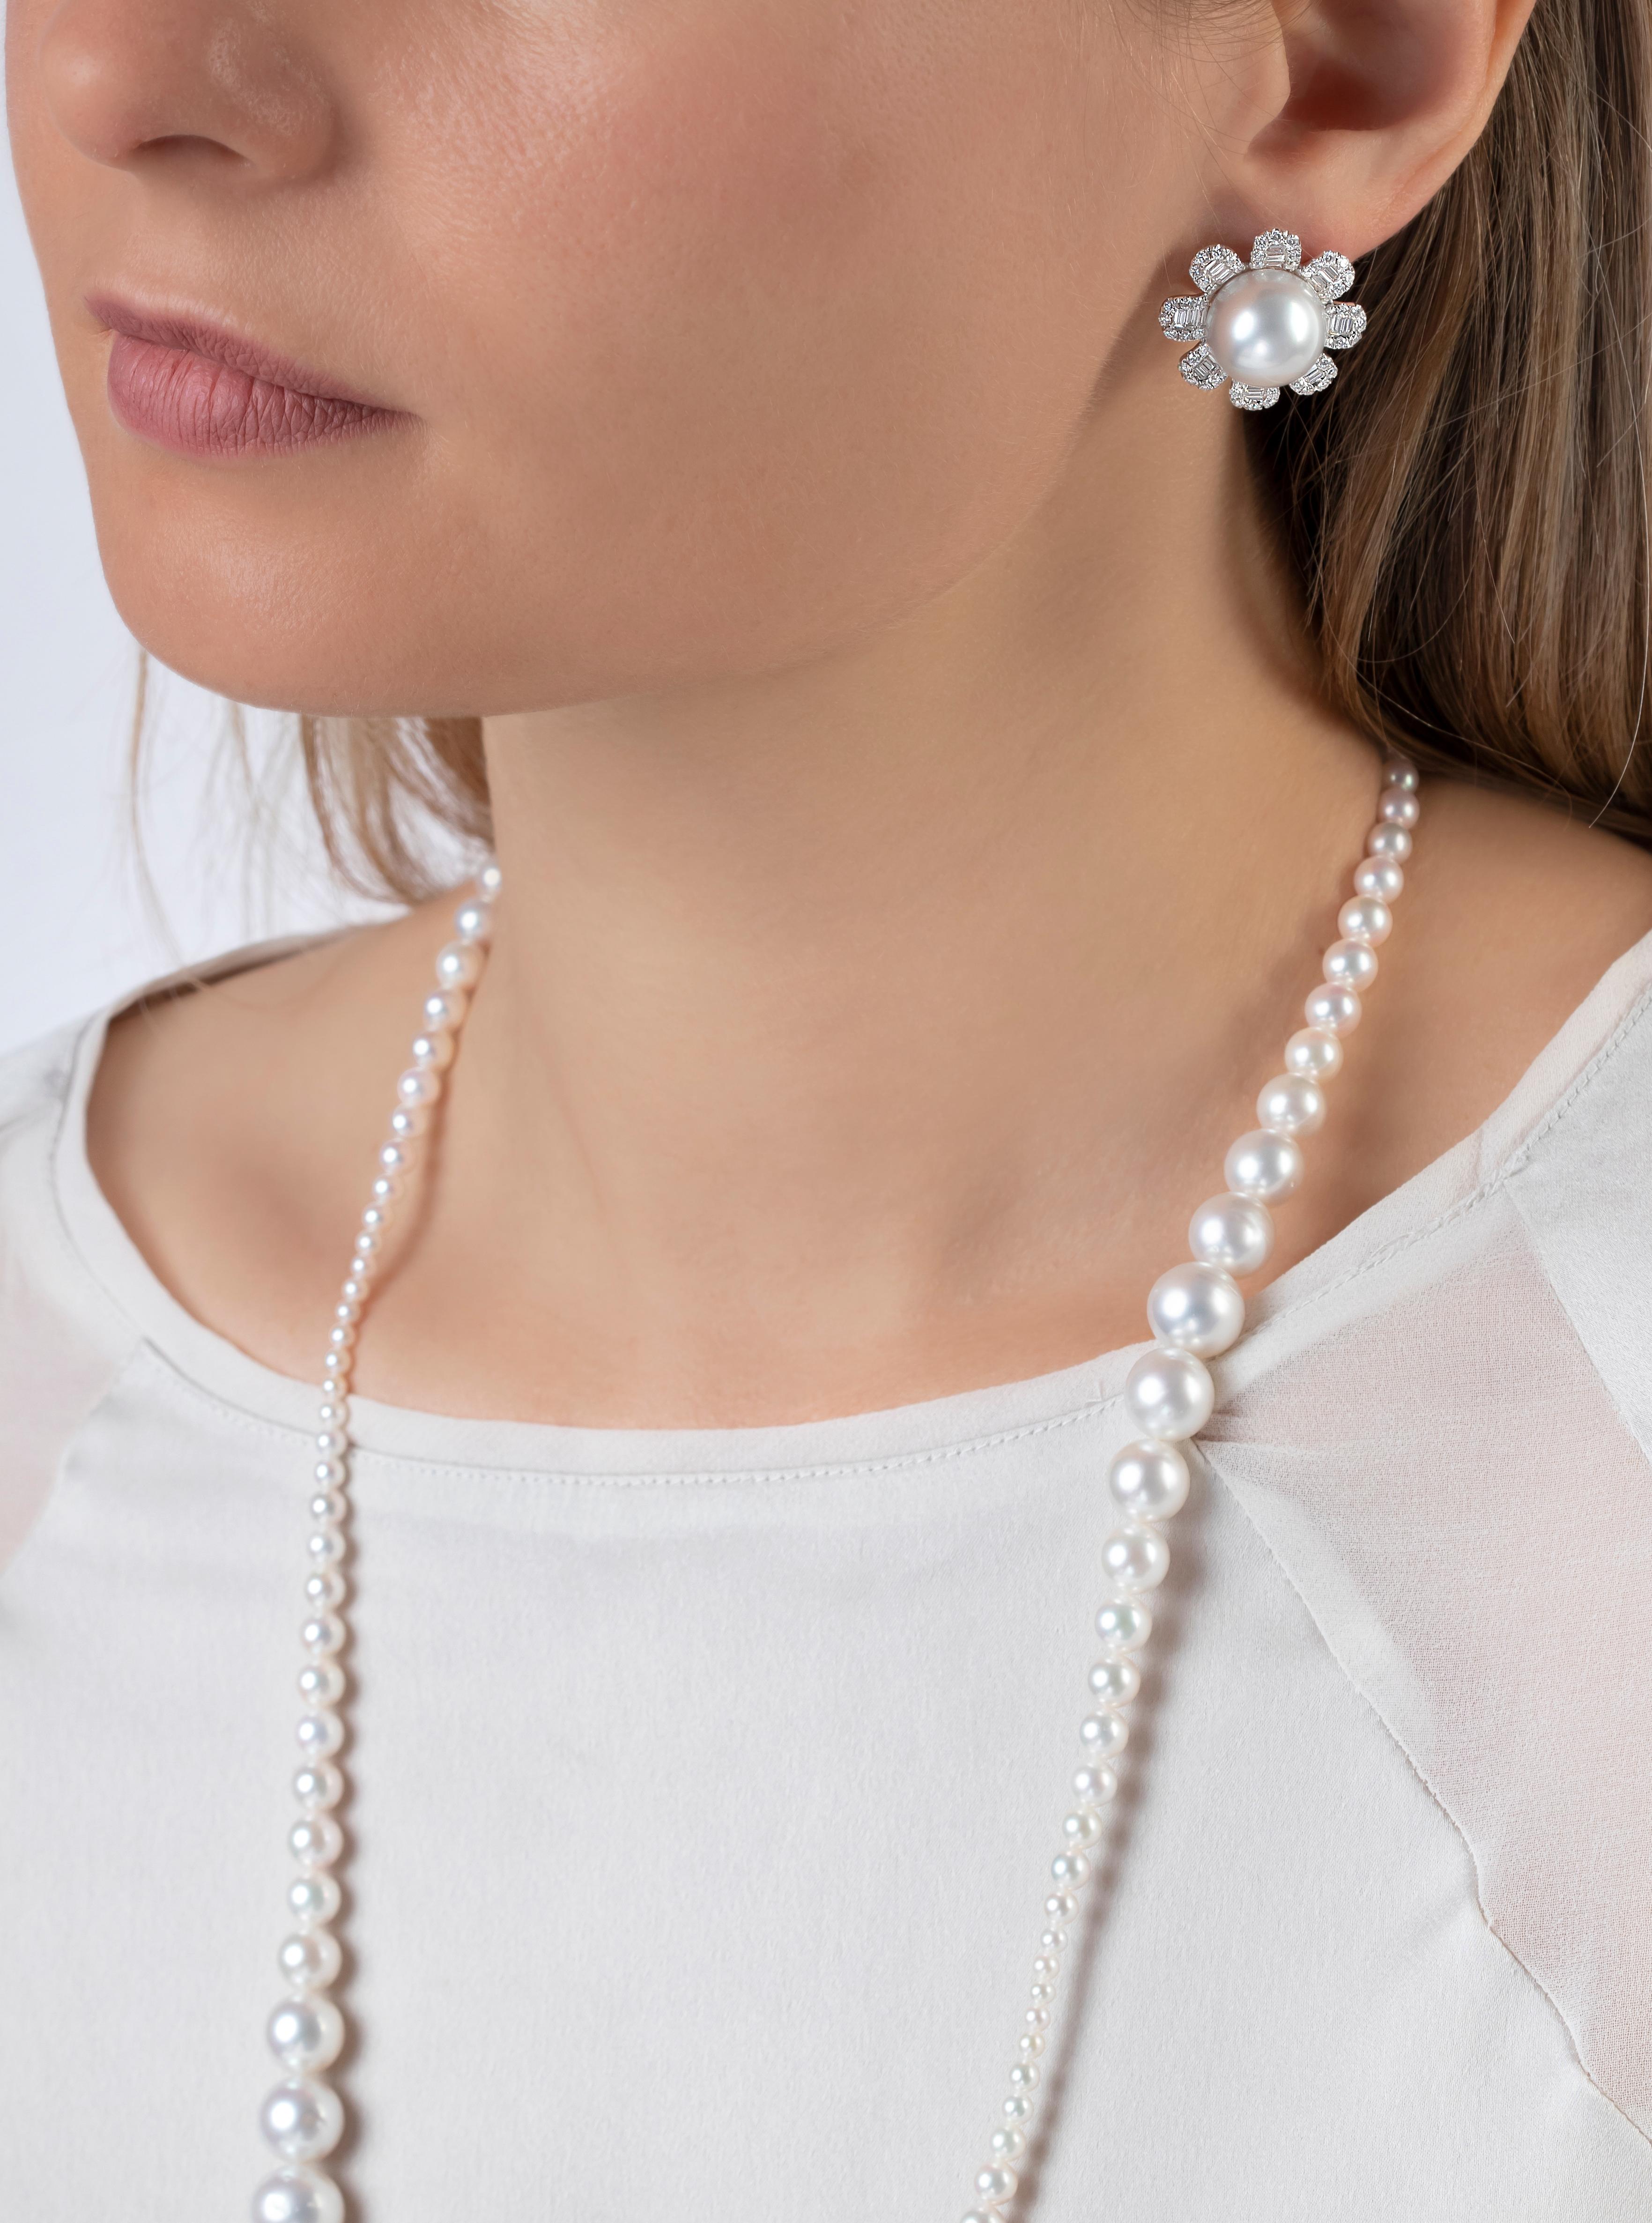 Contemporary Yoko London South Sea Pearl and Diamond Earrings in 18 Karat White Gold